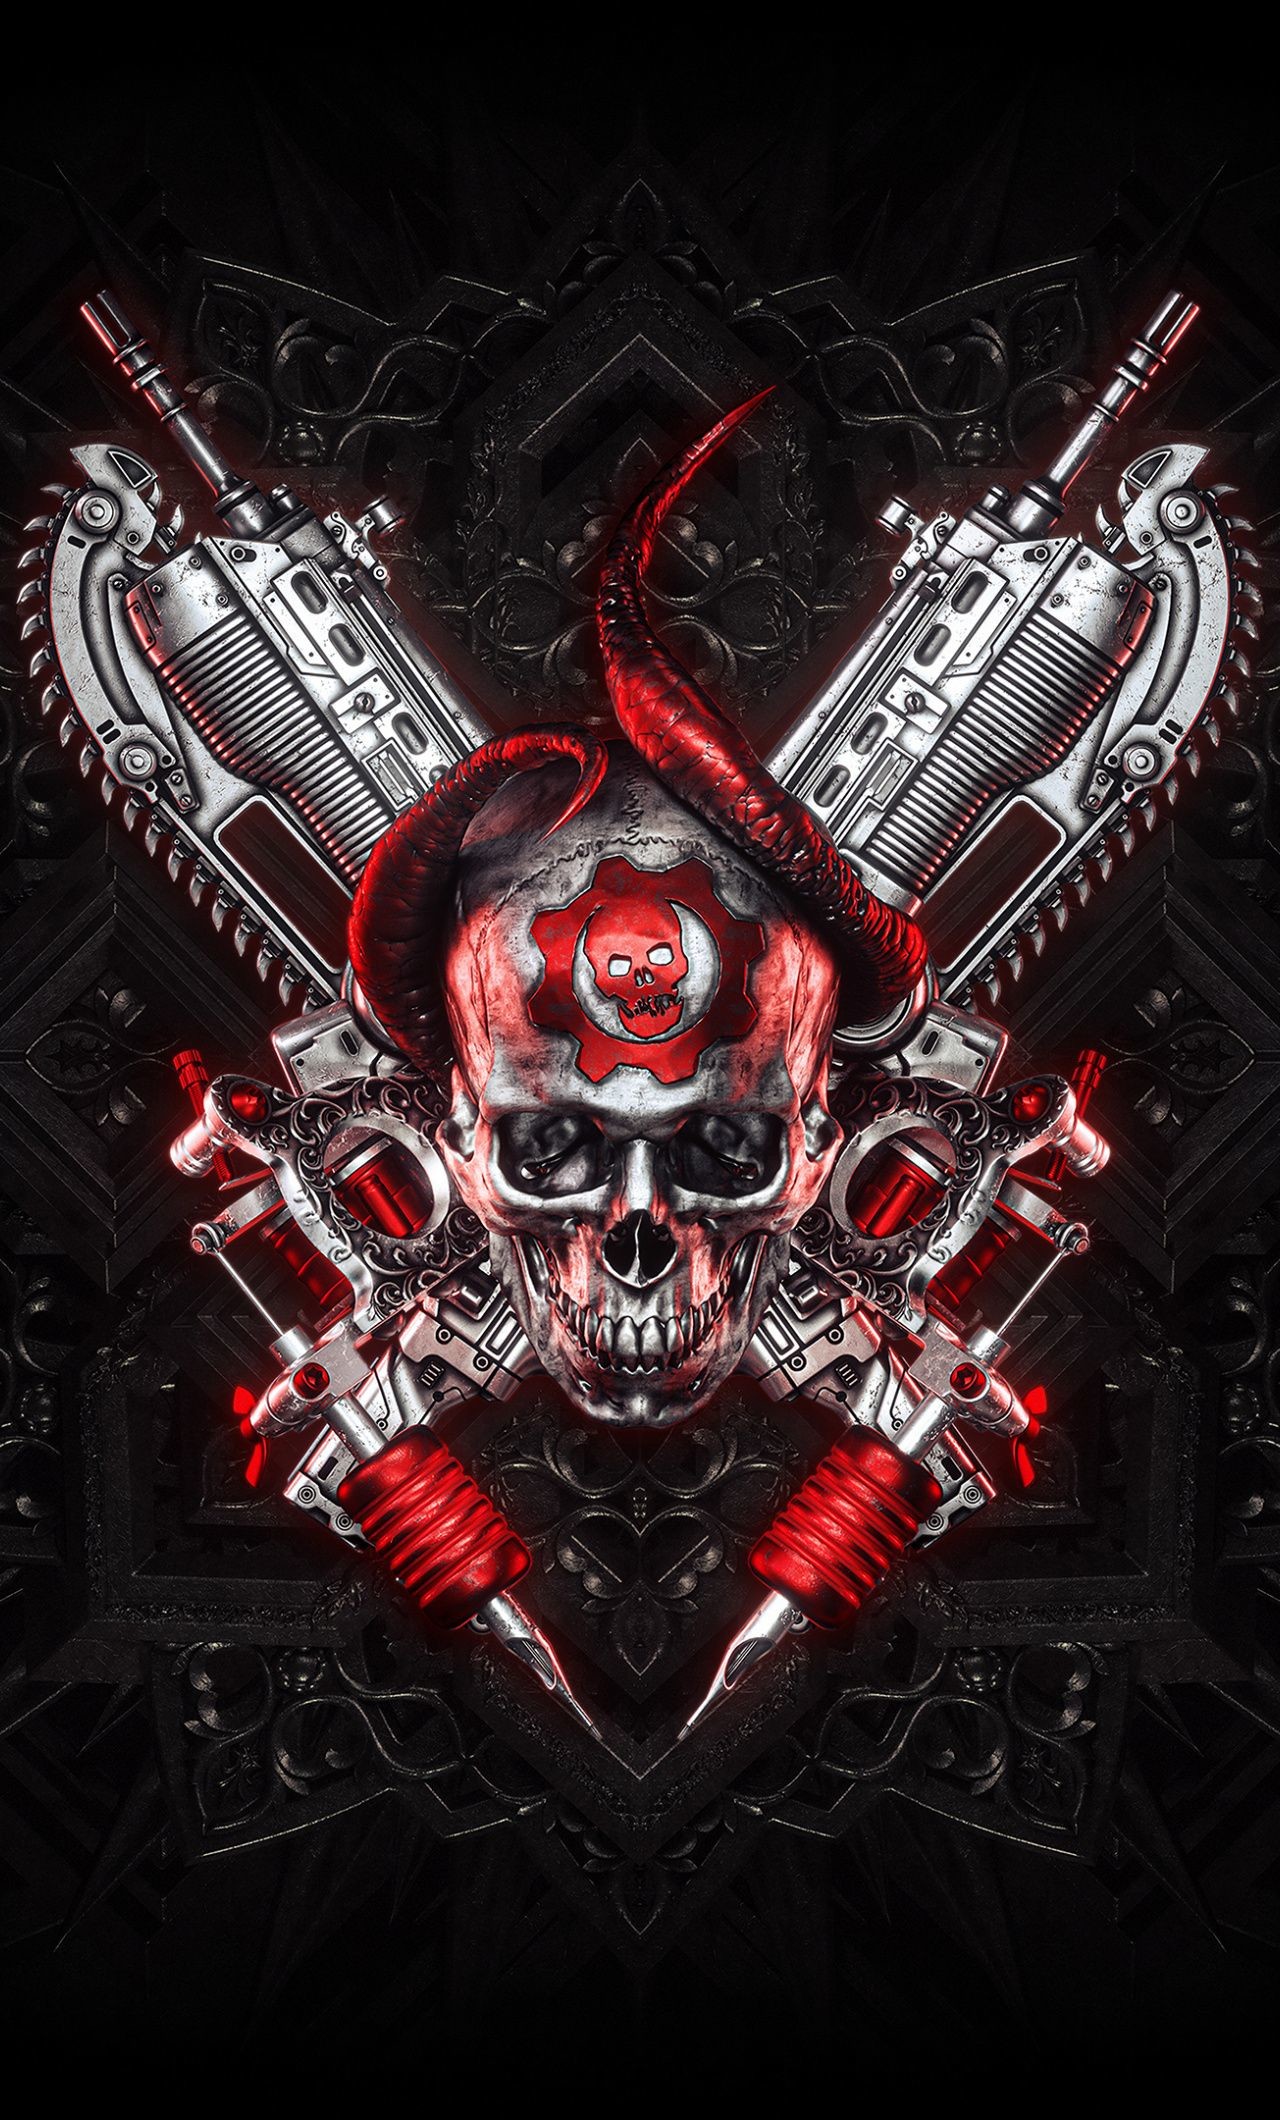 Skulls And Guns Wallpaper (best Skulls And Guns Wallpaper and image) on WallpaperChat